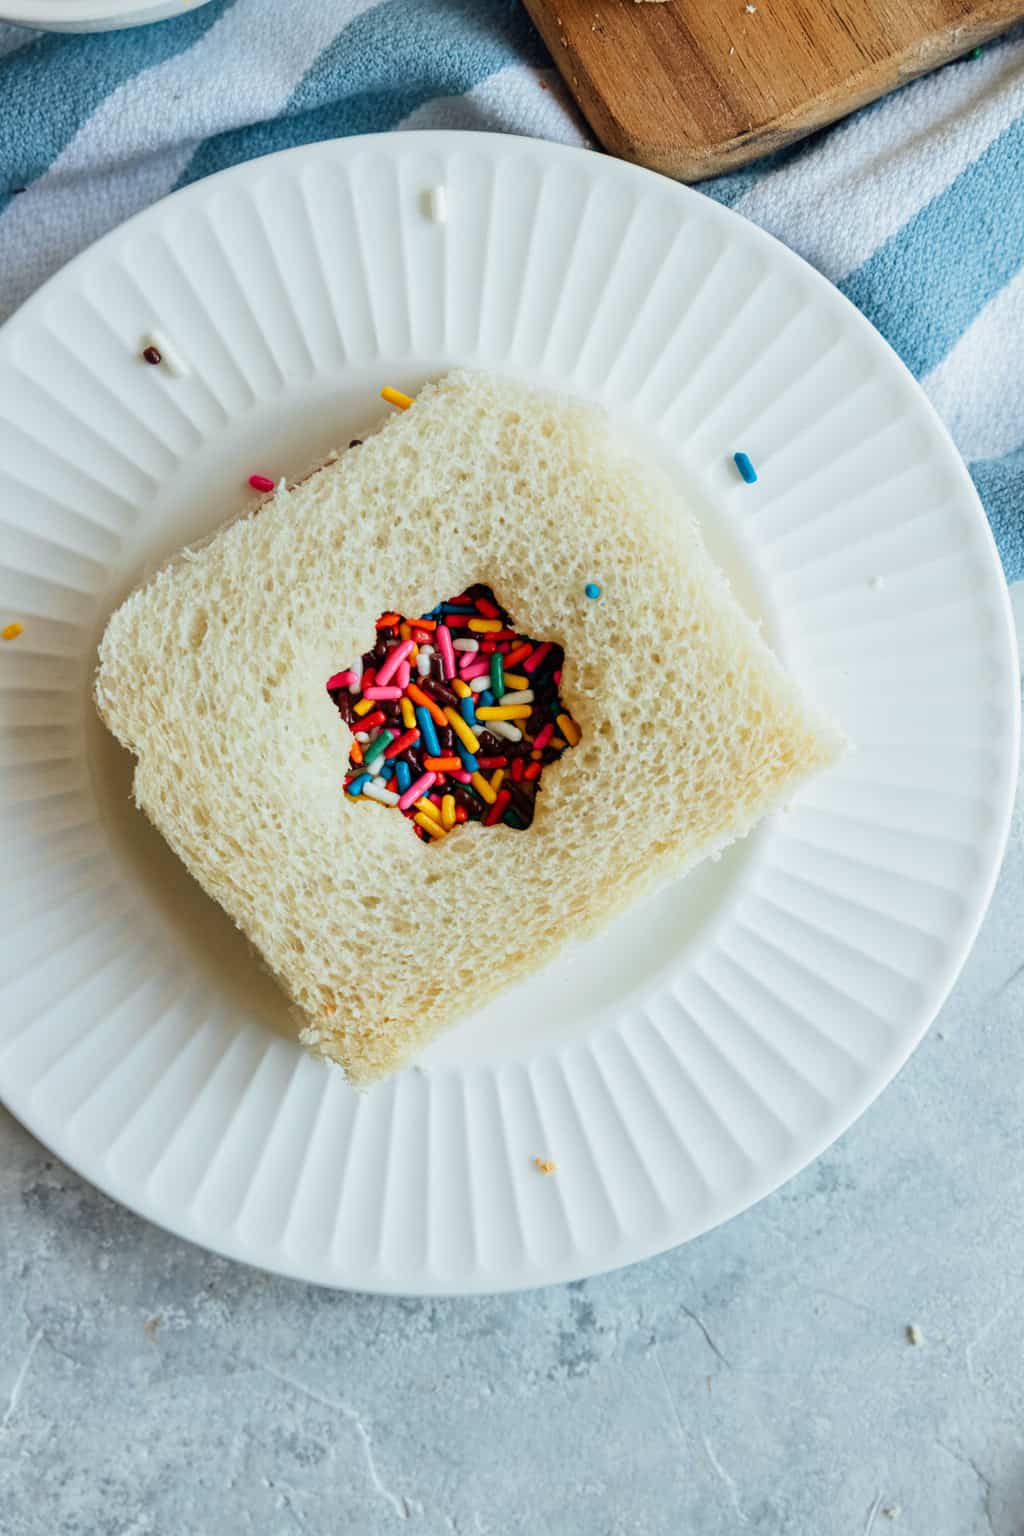 My Favorite Fairy Bread Recipe by Ashley Rose of Sugar & Cloth, a lifestyle blog in Houston, TX